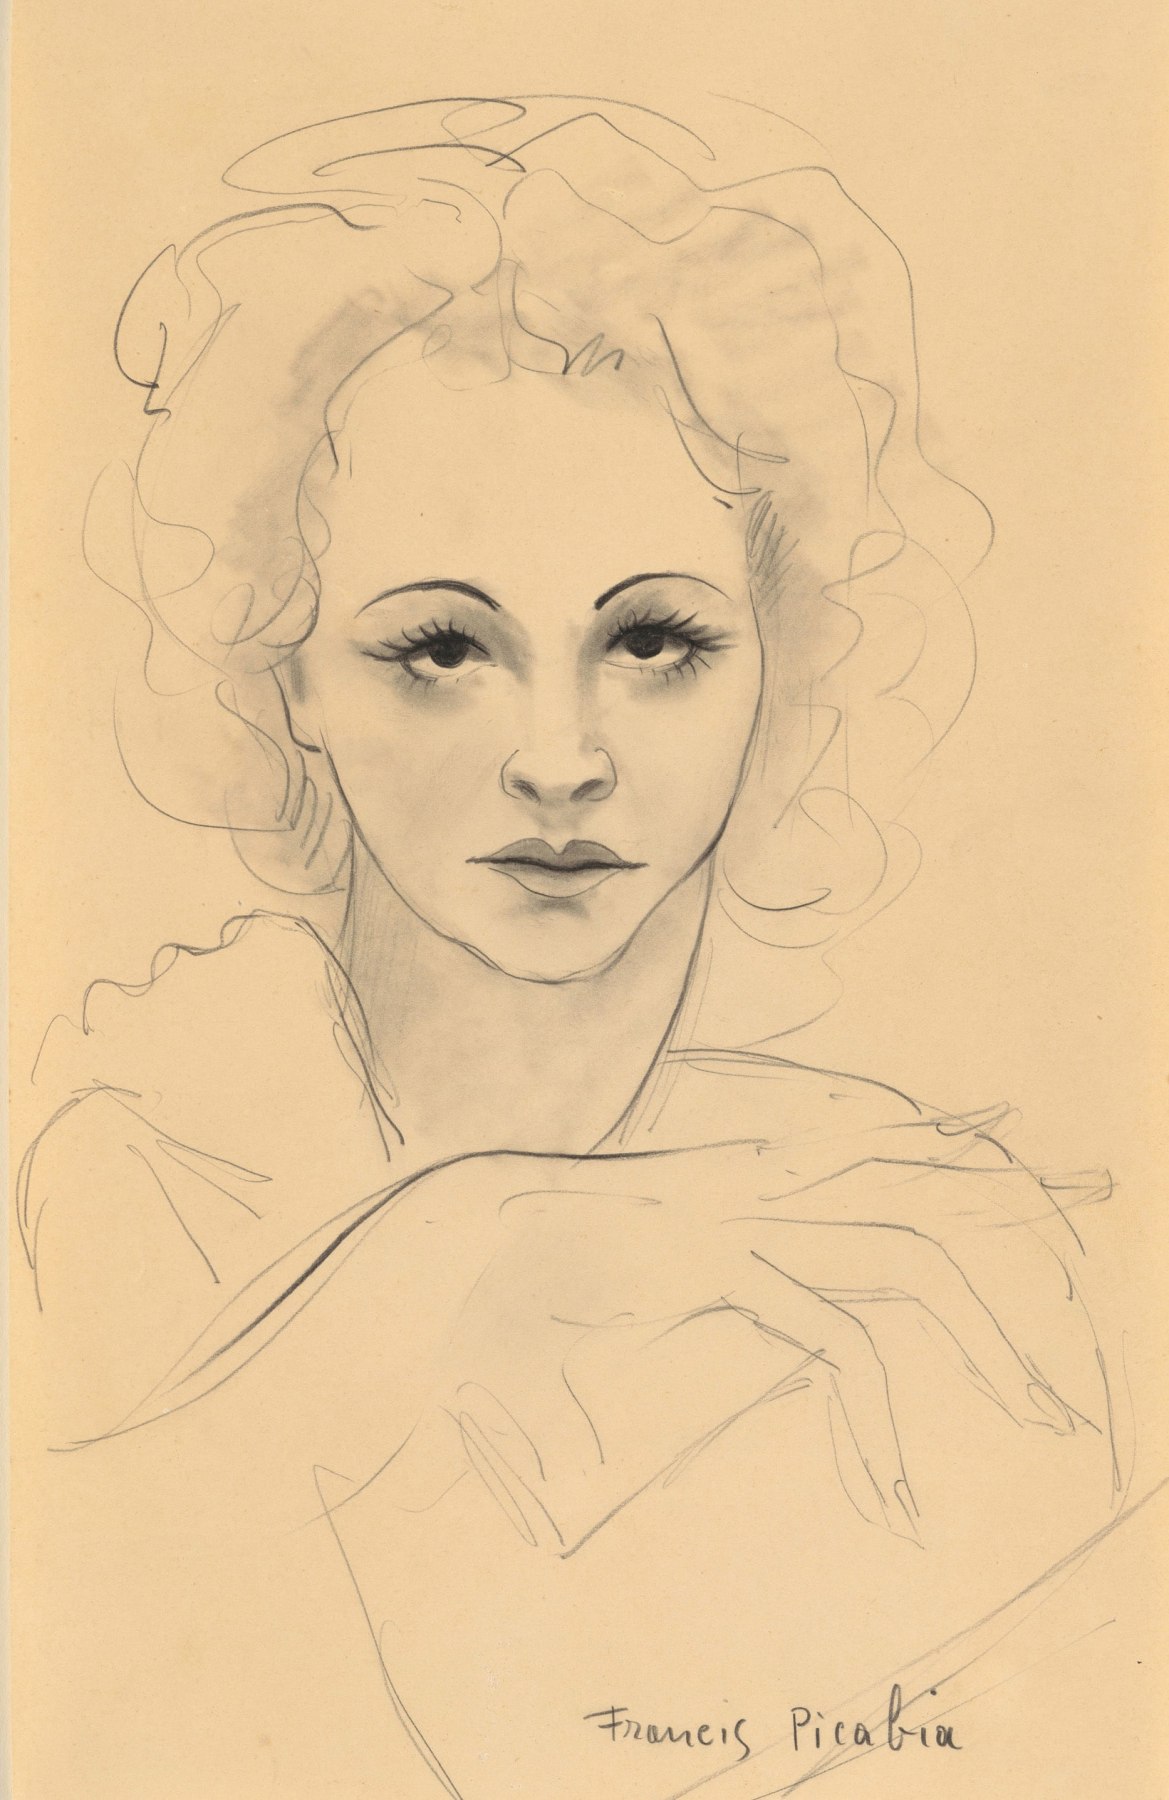 Francis Picabia

&amp;ldquo;Untitled&amp;rdquo;, ca. 1940&amp;ndash;1942

Pencil on paper

13 3/4 x 8 3/4 inches

35 x 22 cm

PIZ 154